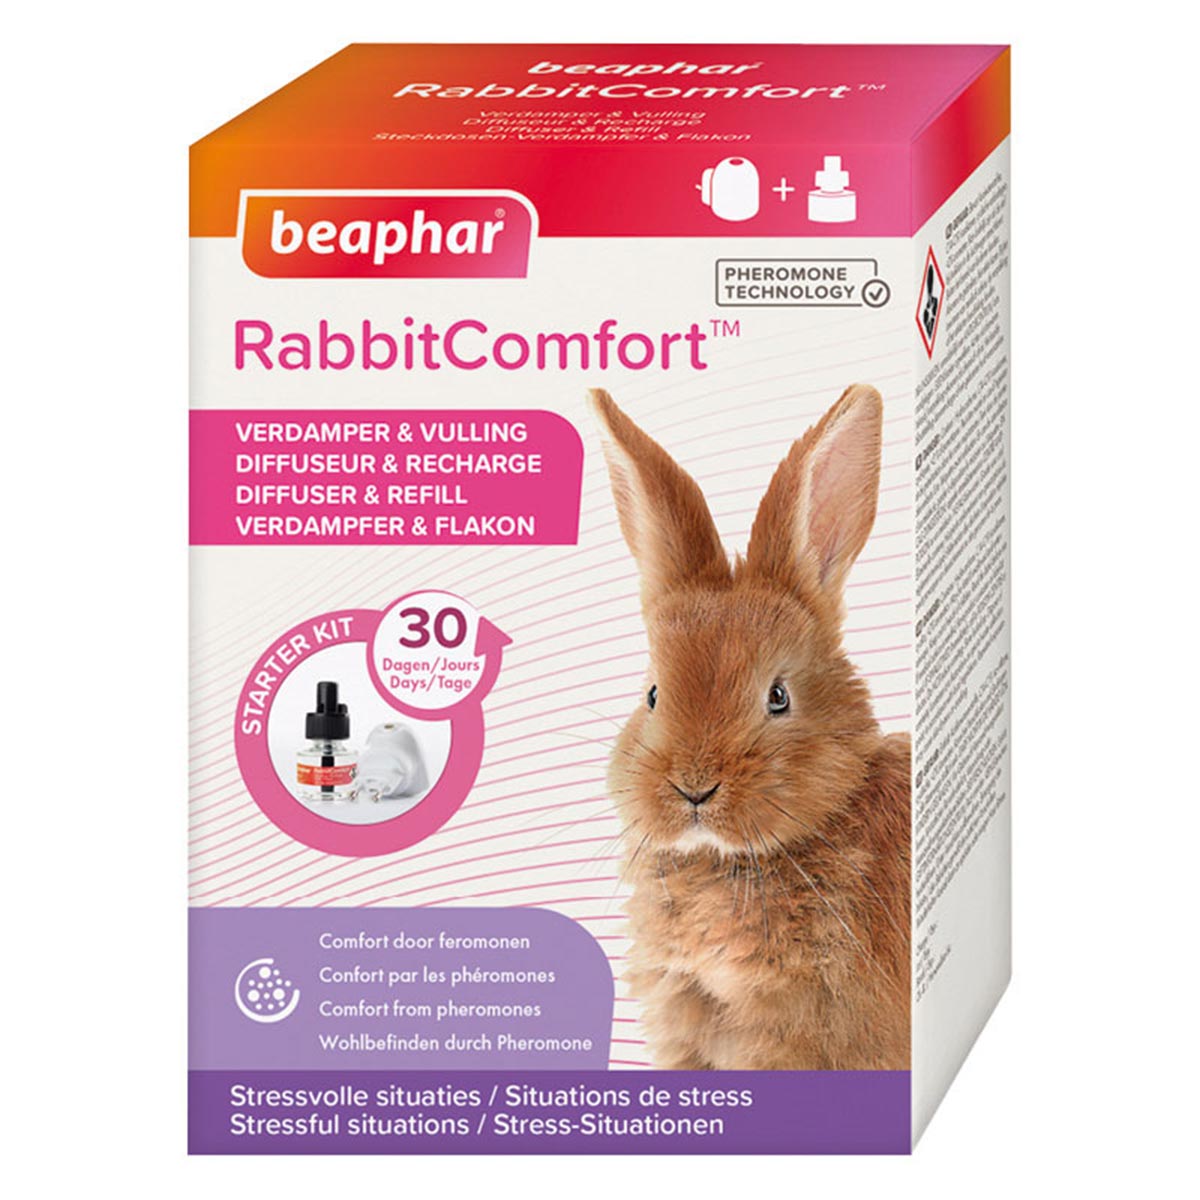 beaphar RabbitComfort Verdampfer & Flakon 48ml von beaphar